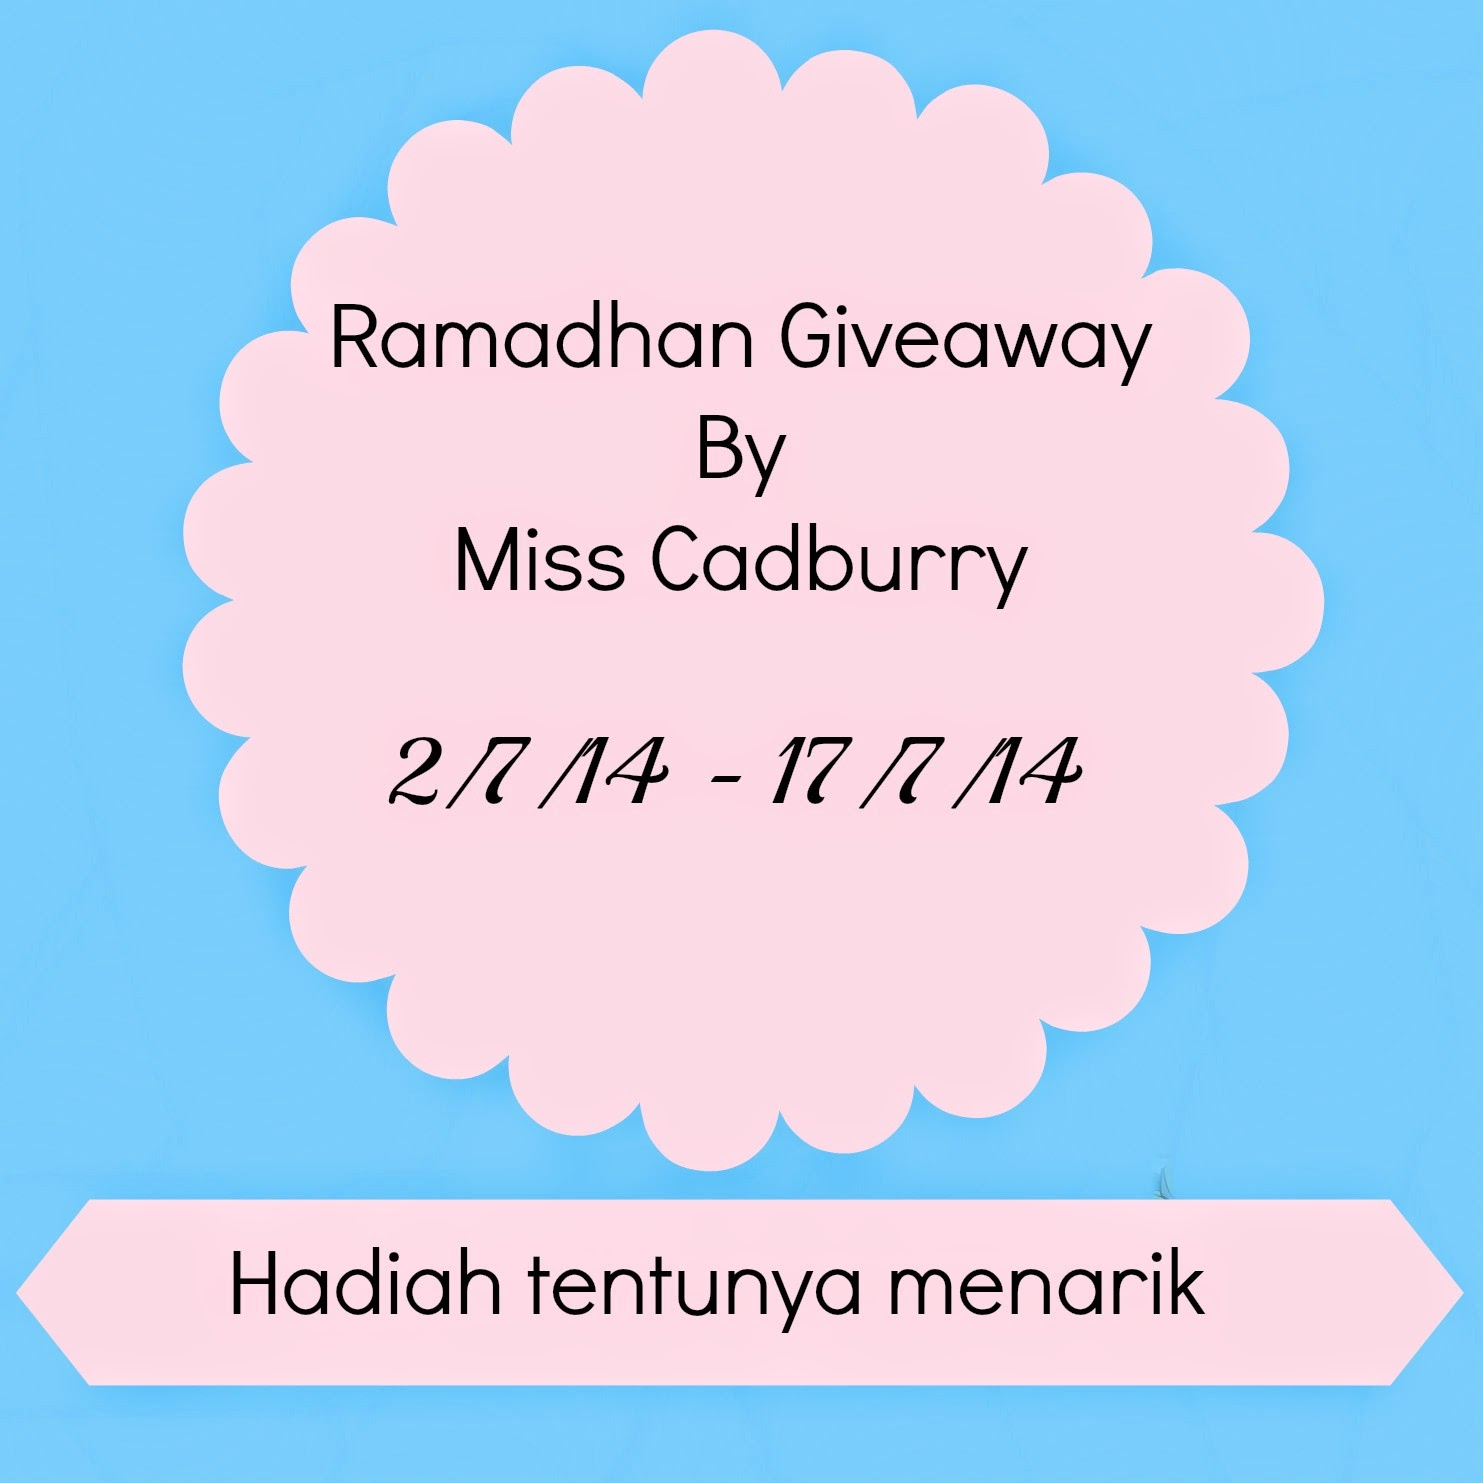 http://allisfarhanah.blogspot.com/2014/07/ramadhan-giveaway-by-miss-cadburry.html